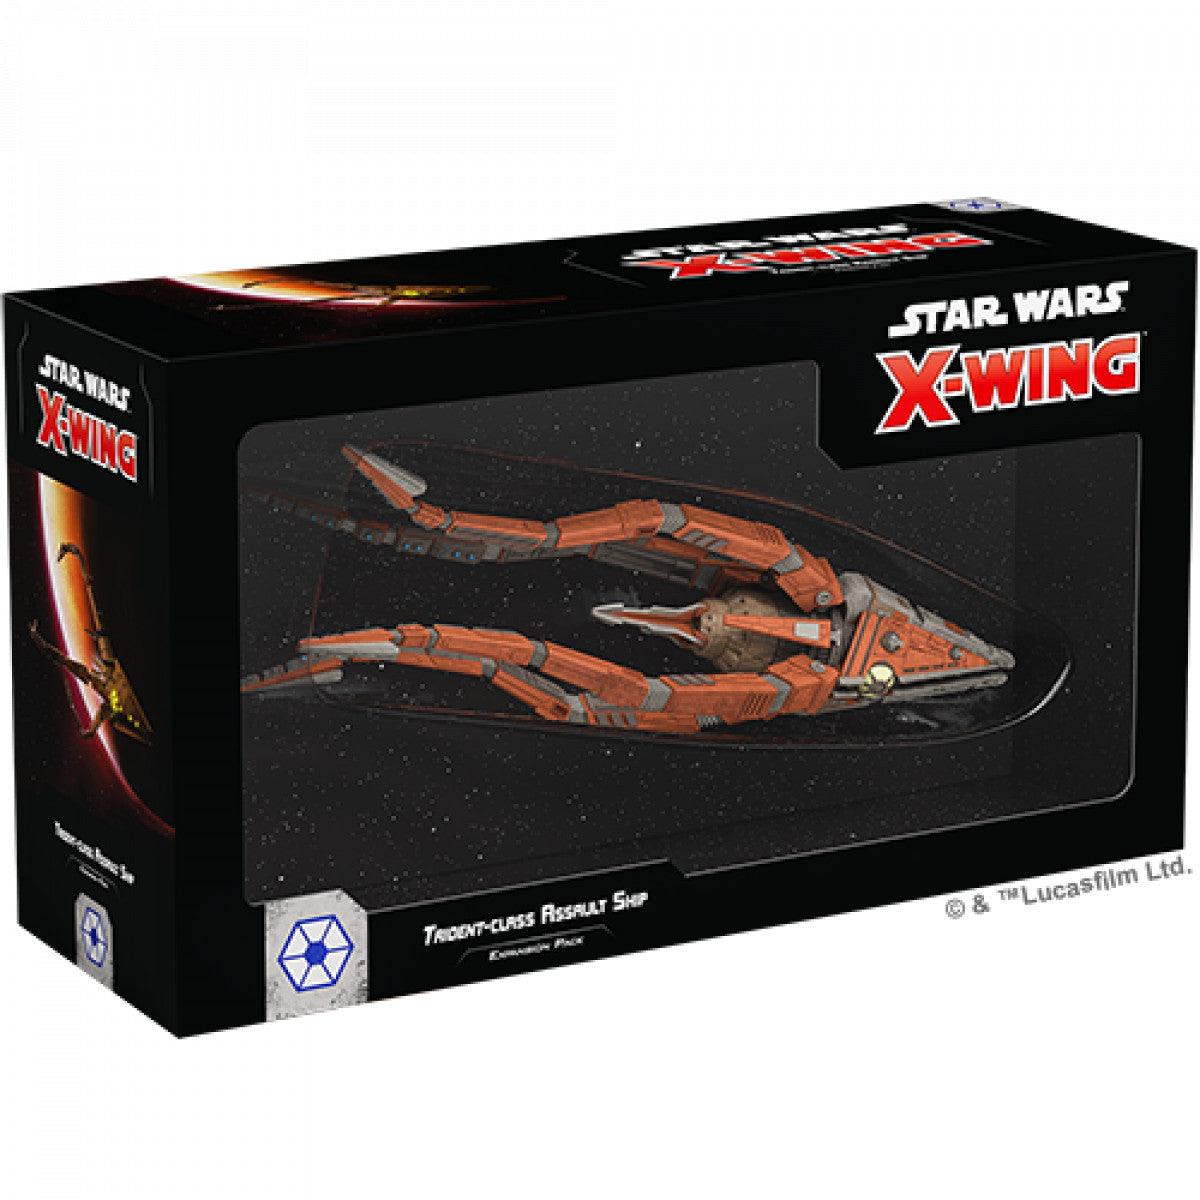 VR-93447 Star Wars X-Wing 2nd Edition Trident-class Assault Ship - Fantasy Flight Games - Titan Pop Culture